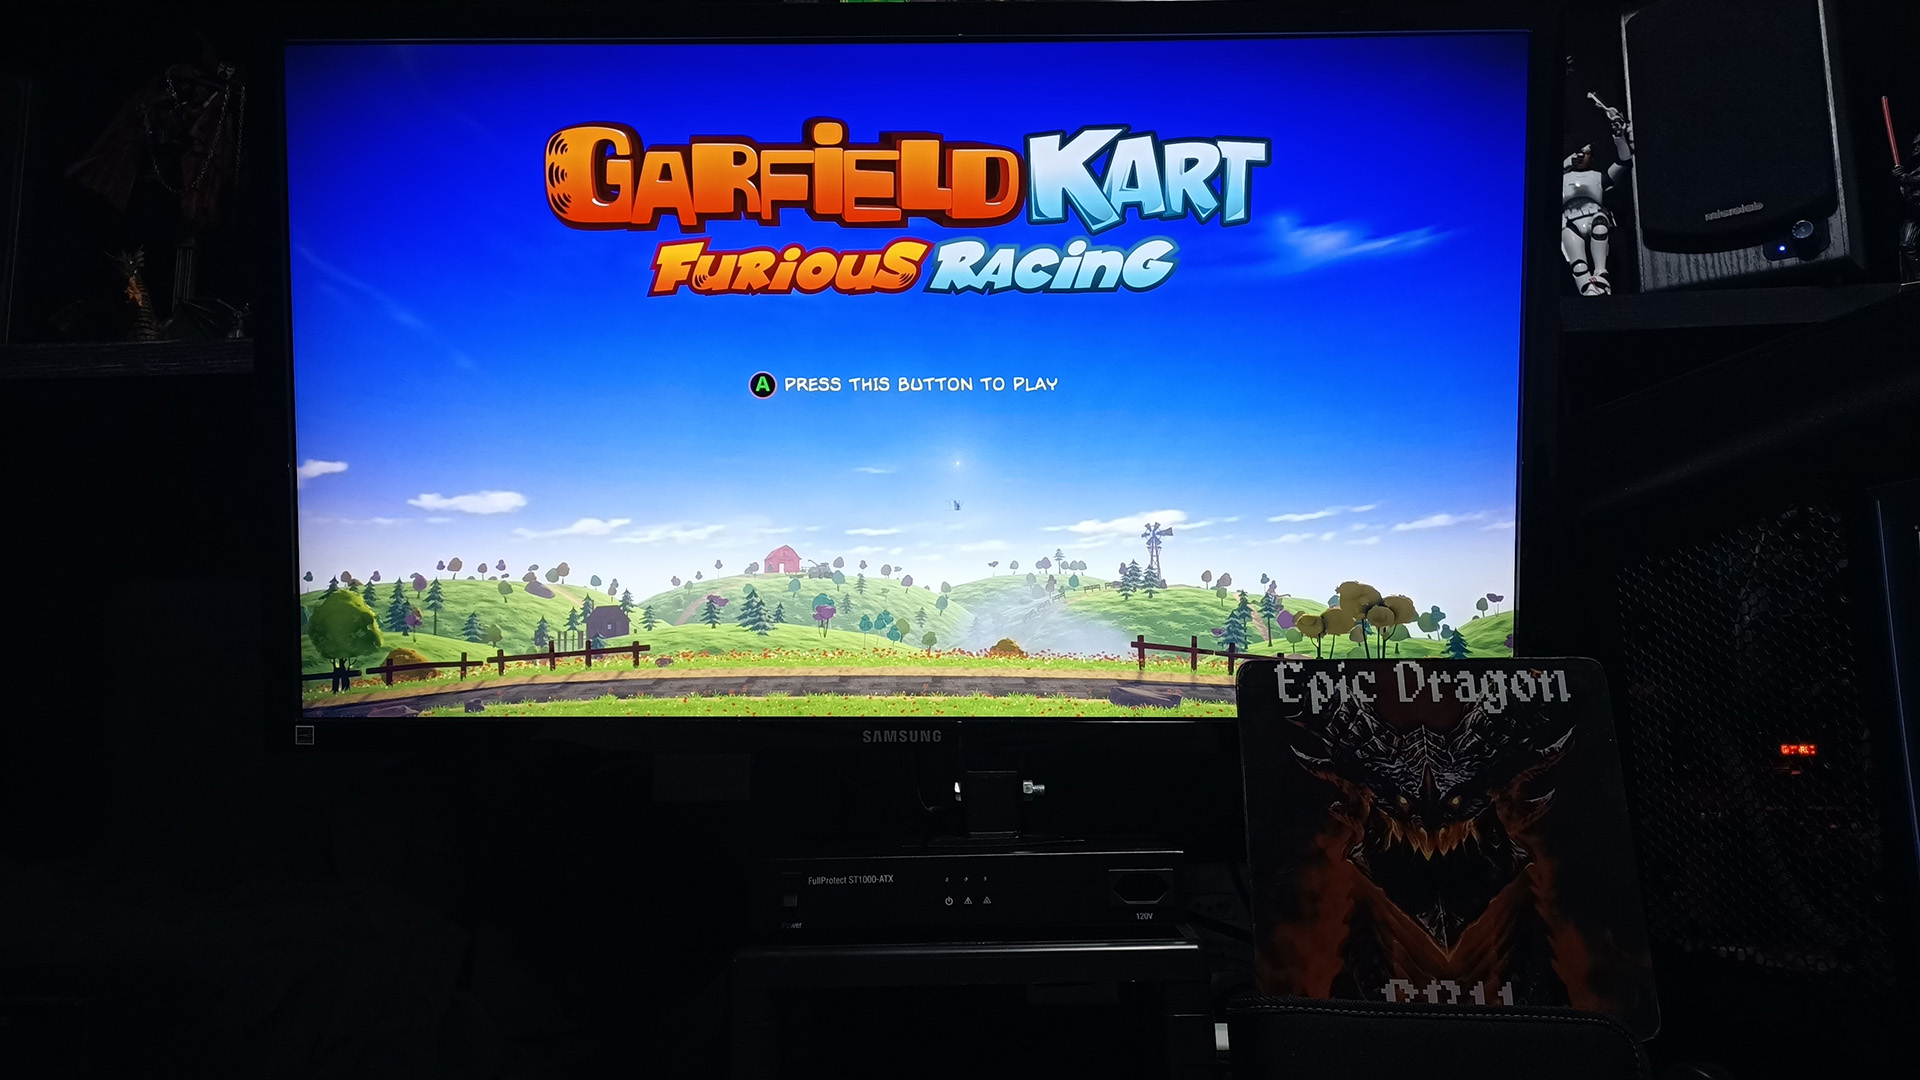 Garfield Kart Furious Racing: Sneak-A-Peak [Time Trial: 3 Laps] time of 0:02:59.774